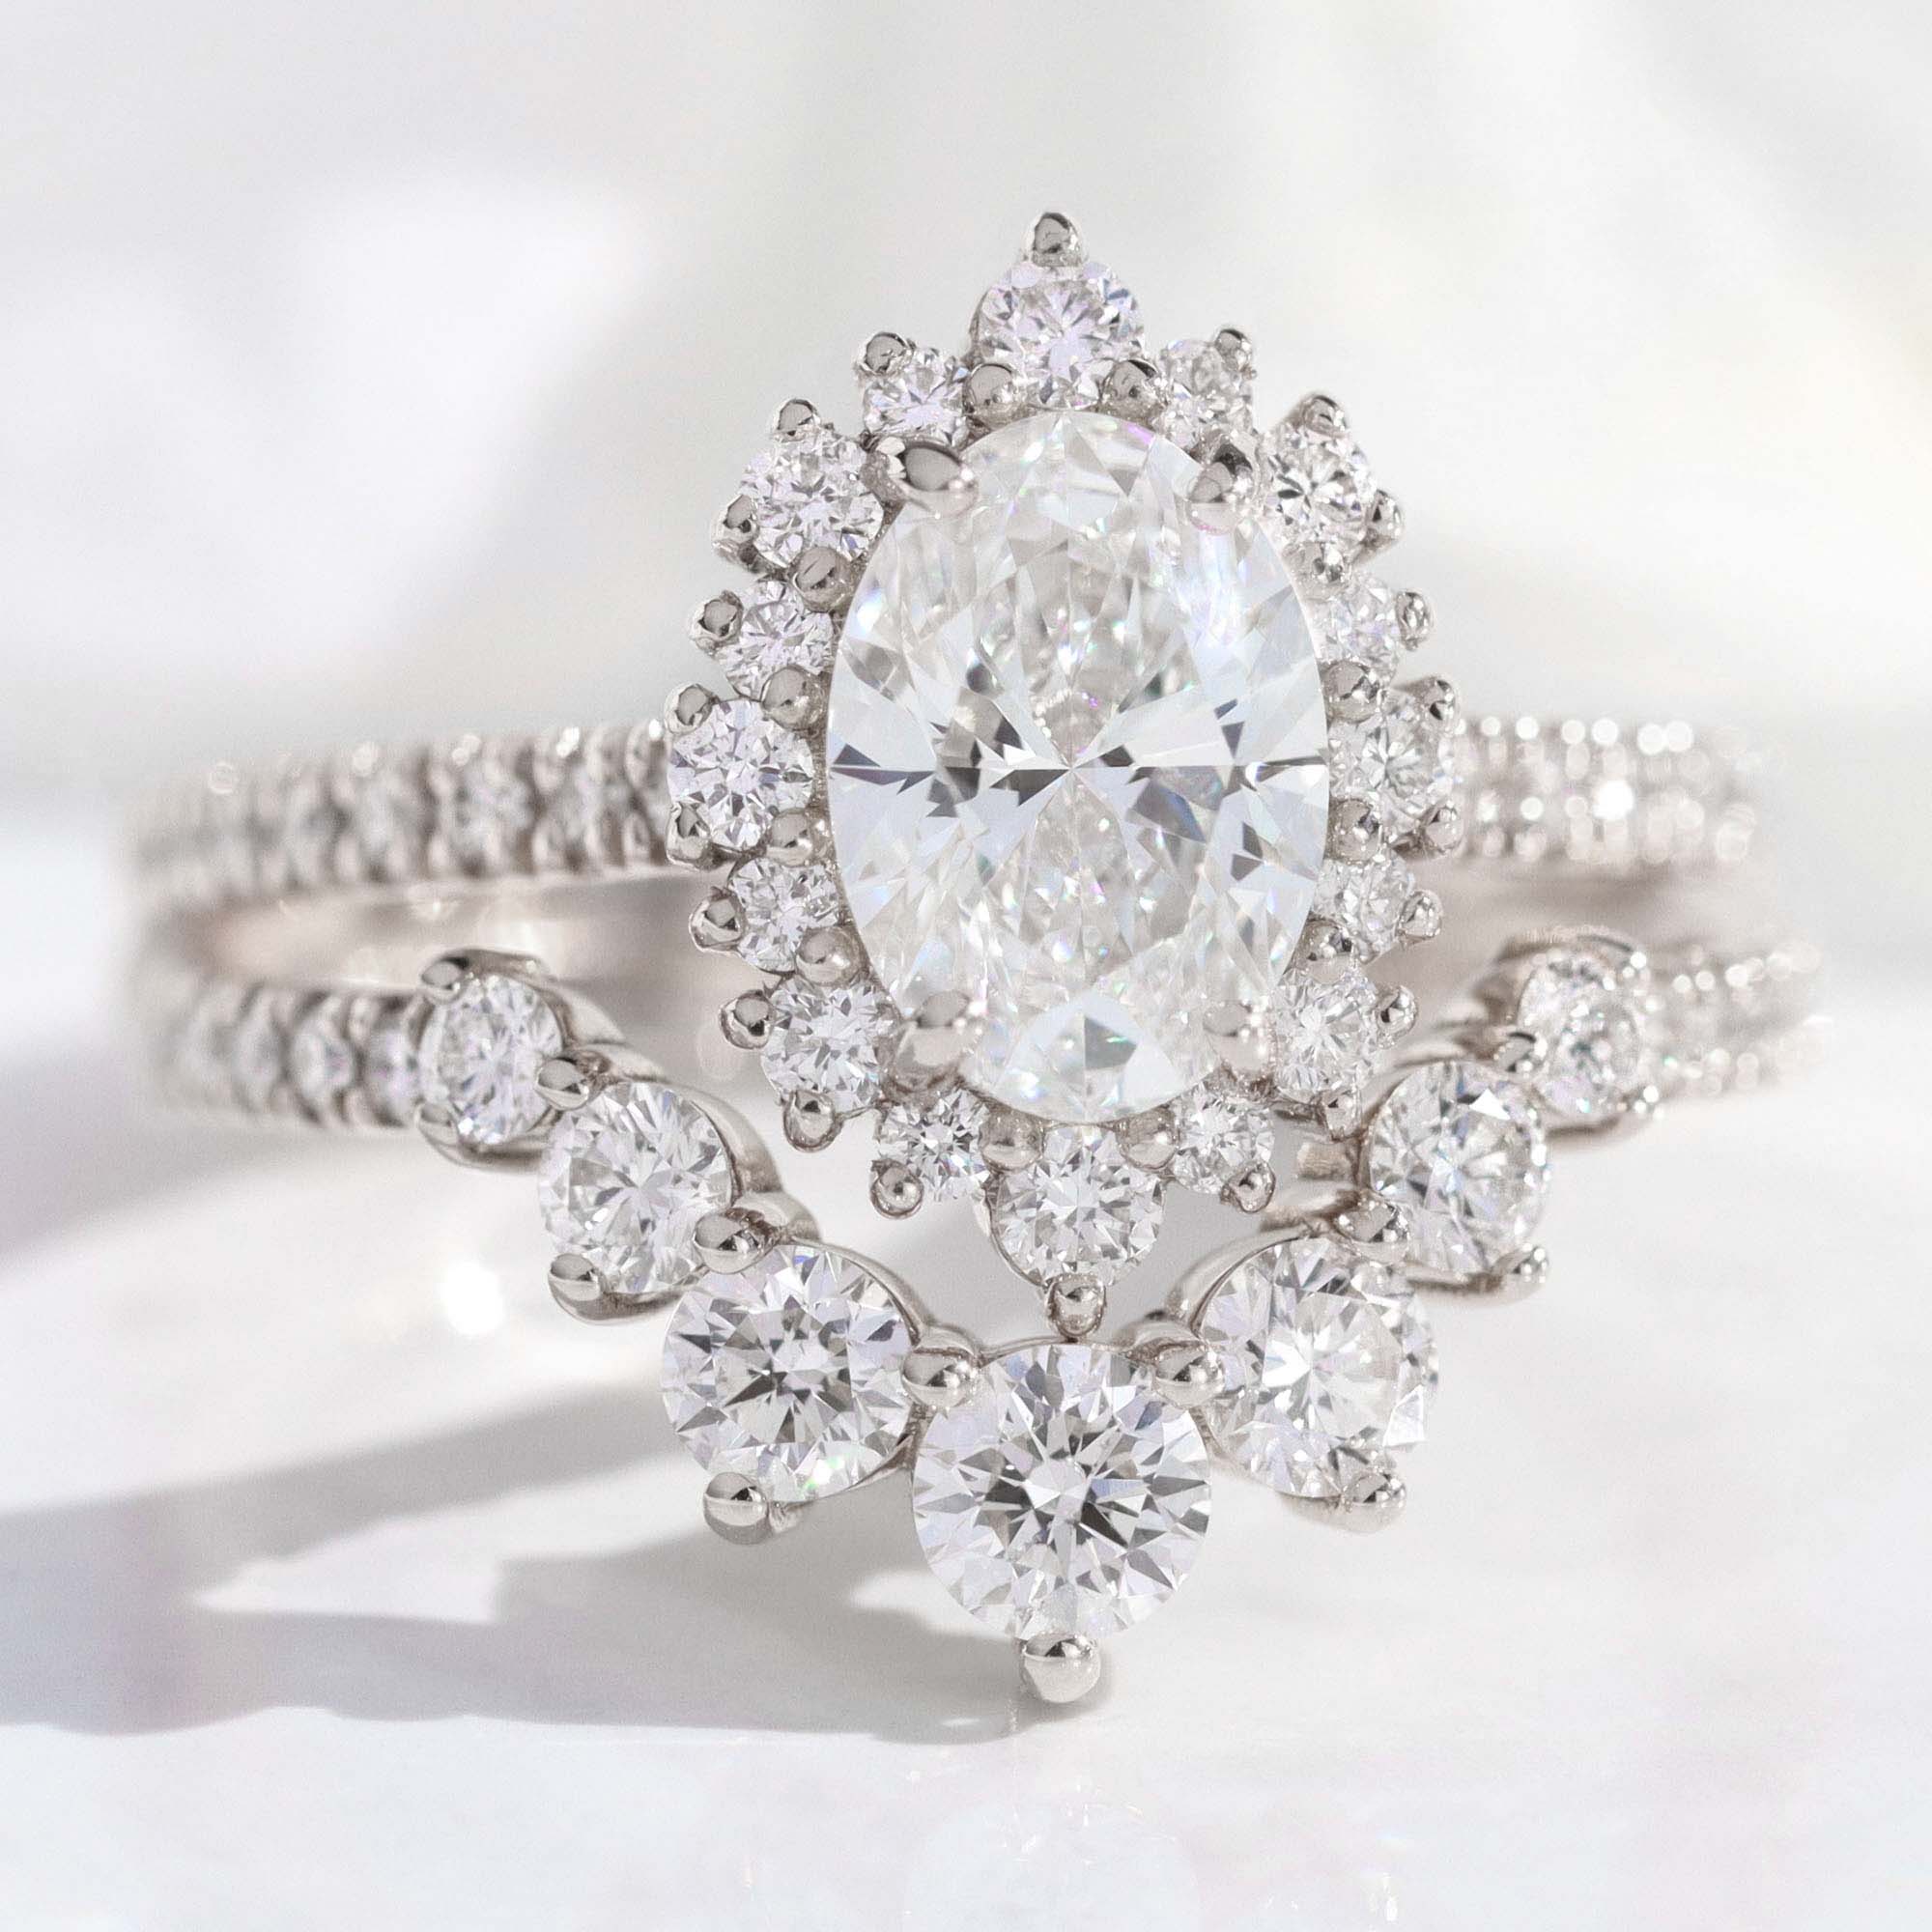 lab diamond ring stack white gold halo oval diamond engagement ring set La More Design Jewelry